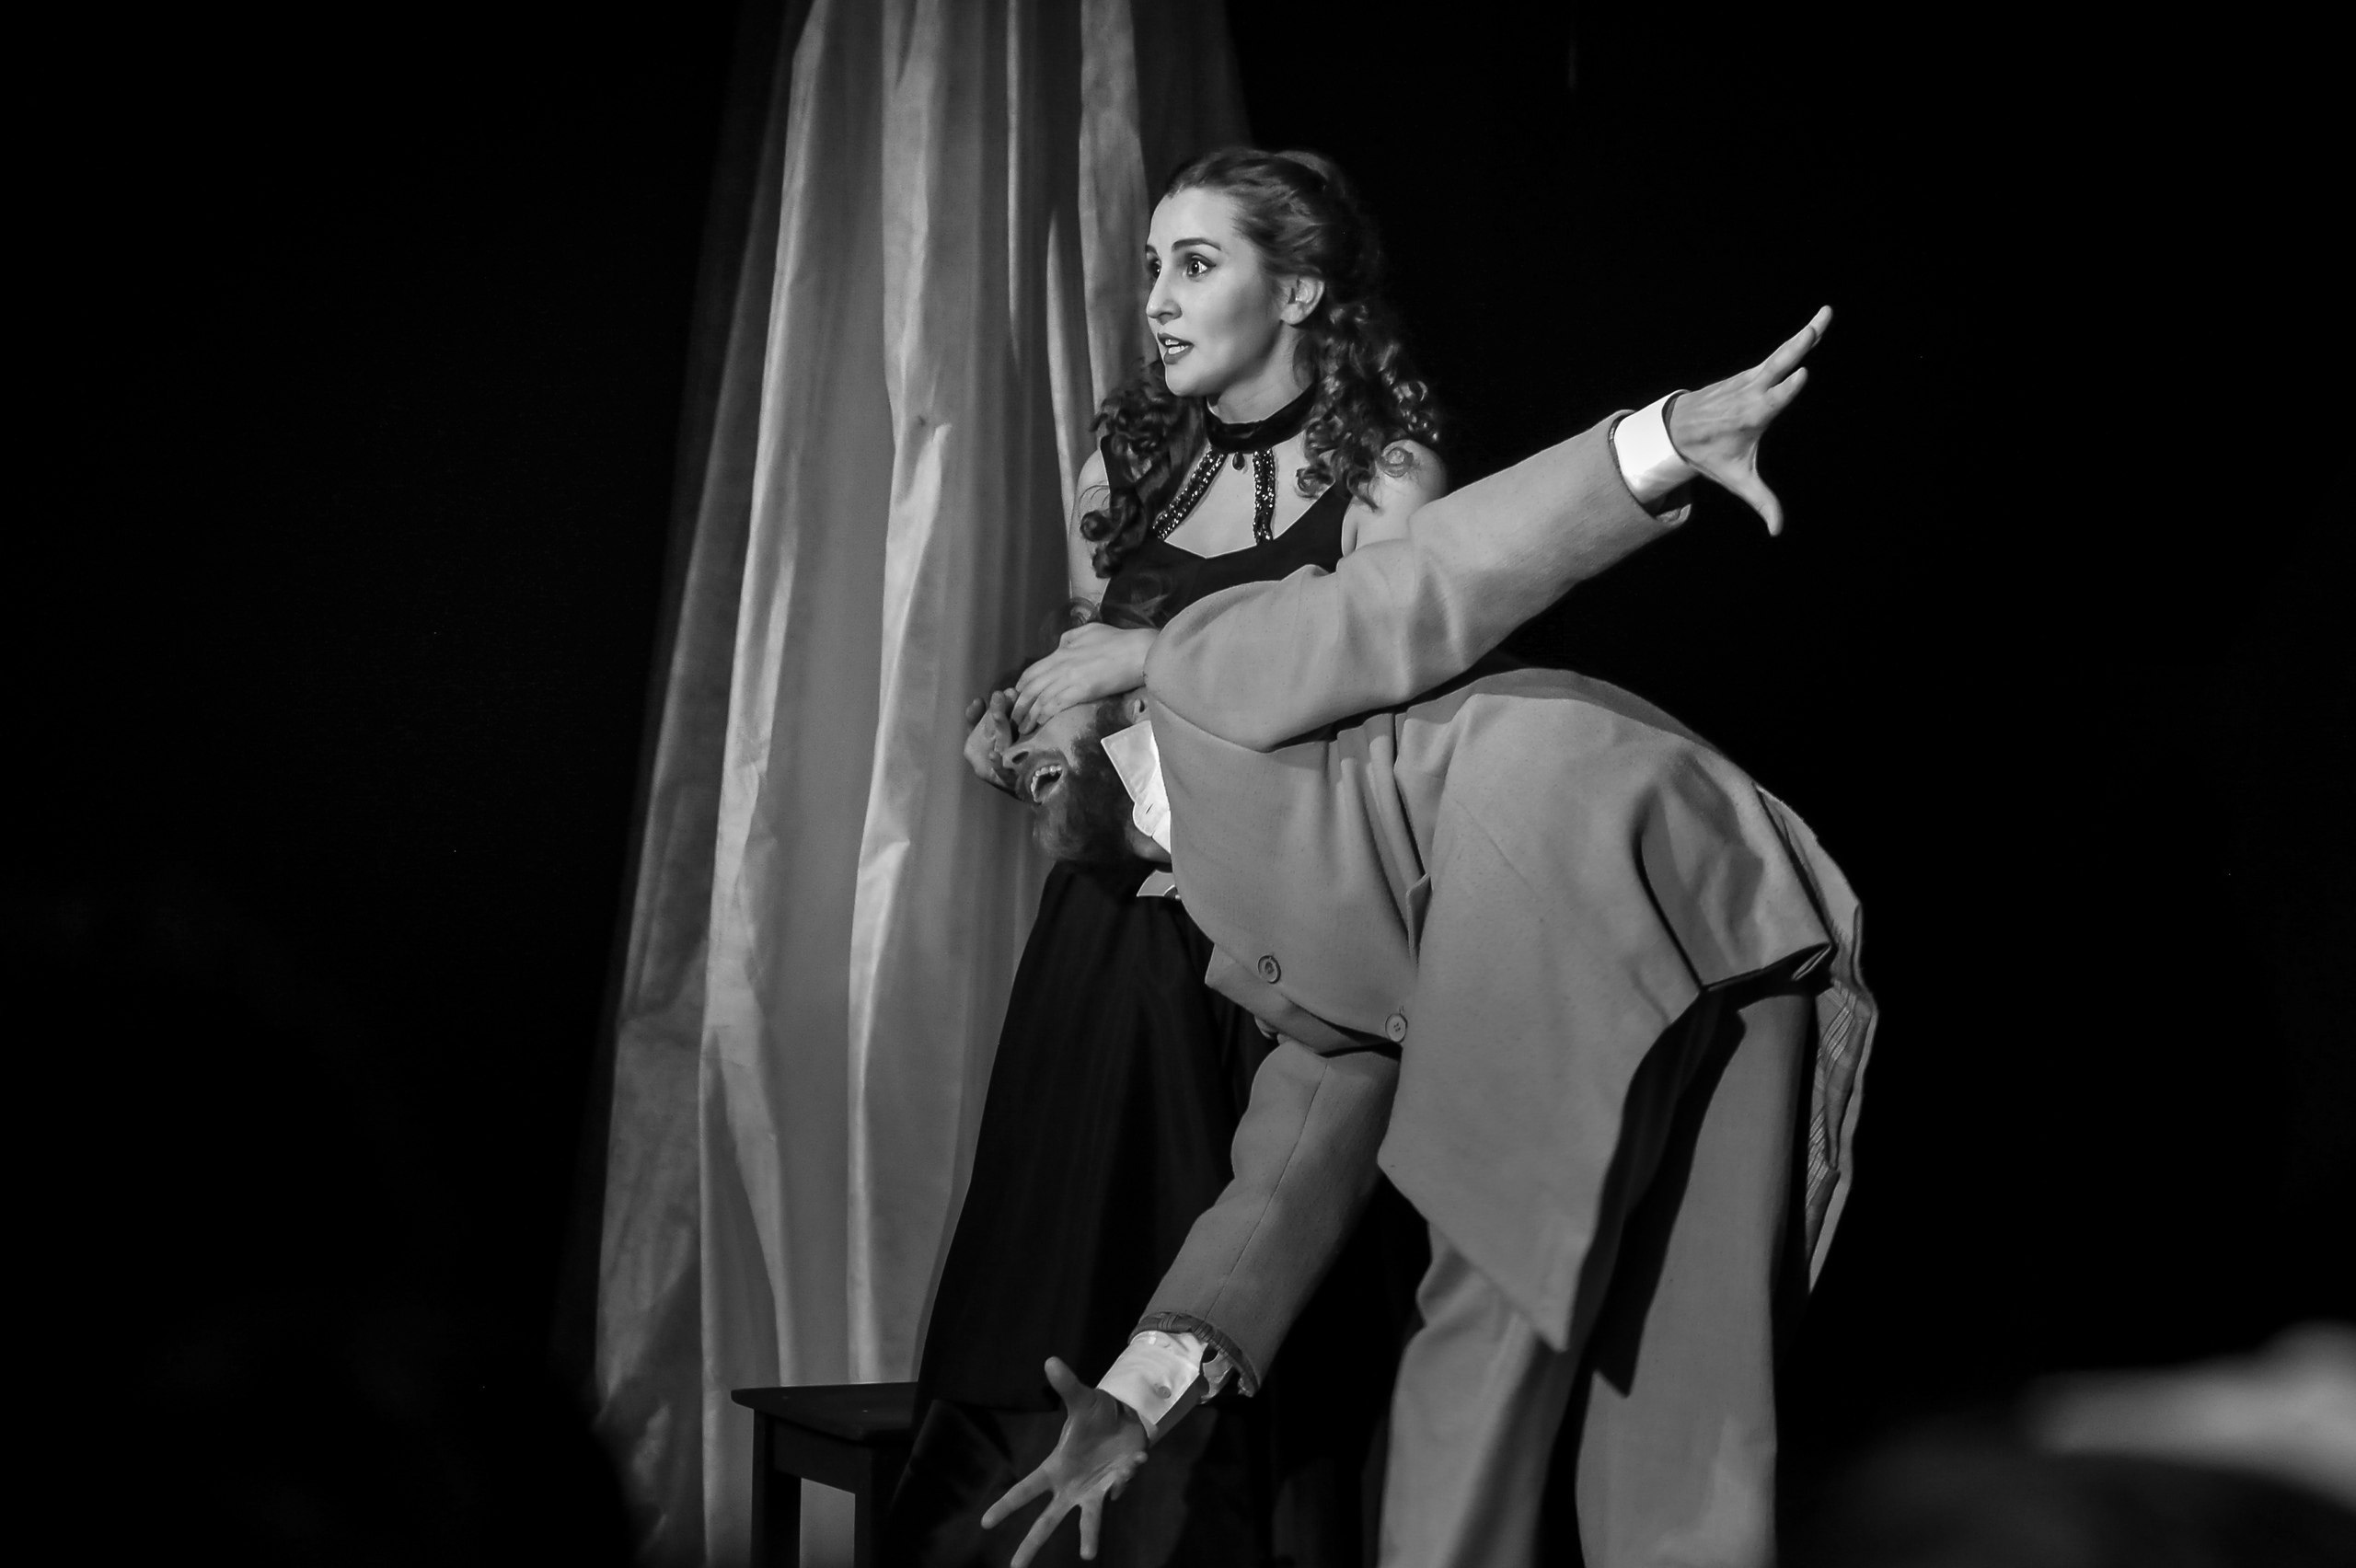 Ksenia as actress in theater Levendal Saint-Petersburg